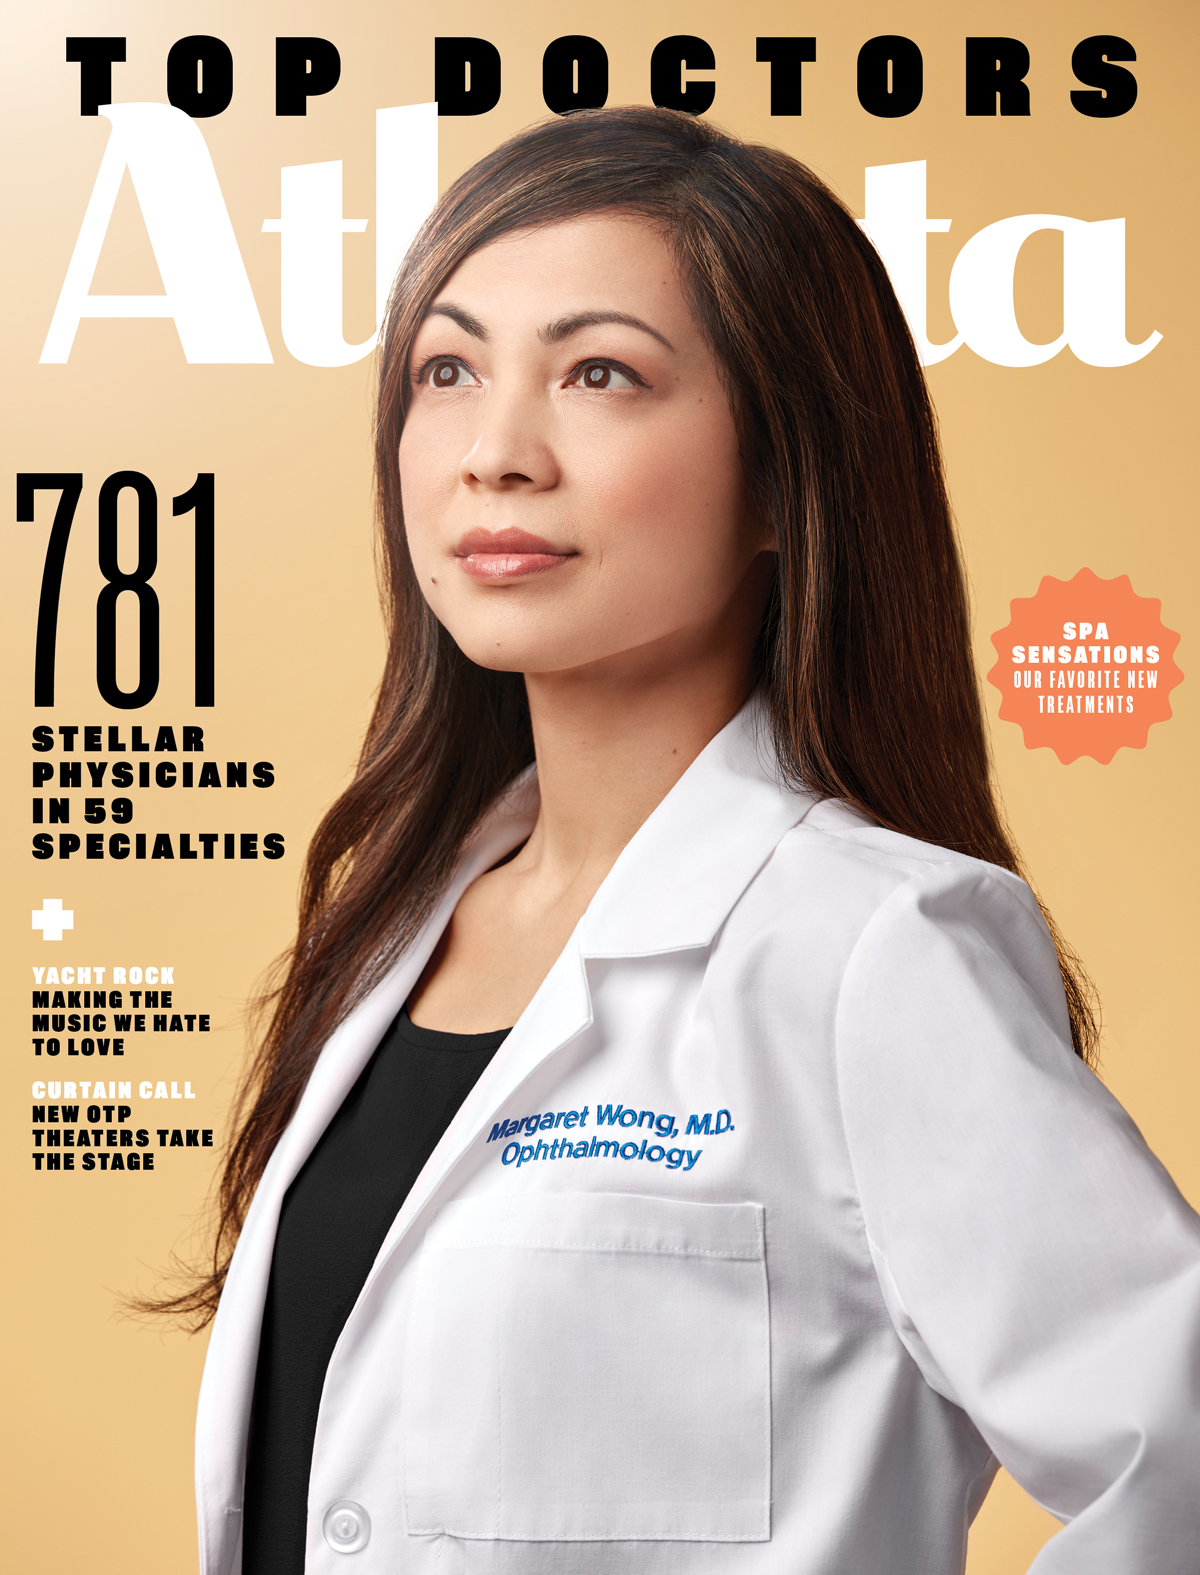 One of Atlanta’s Top Doctors by Atlanta Magazine 2018